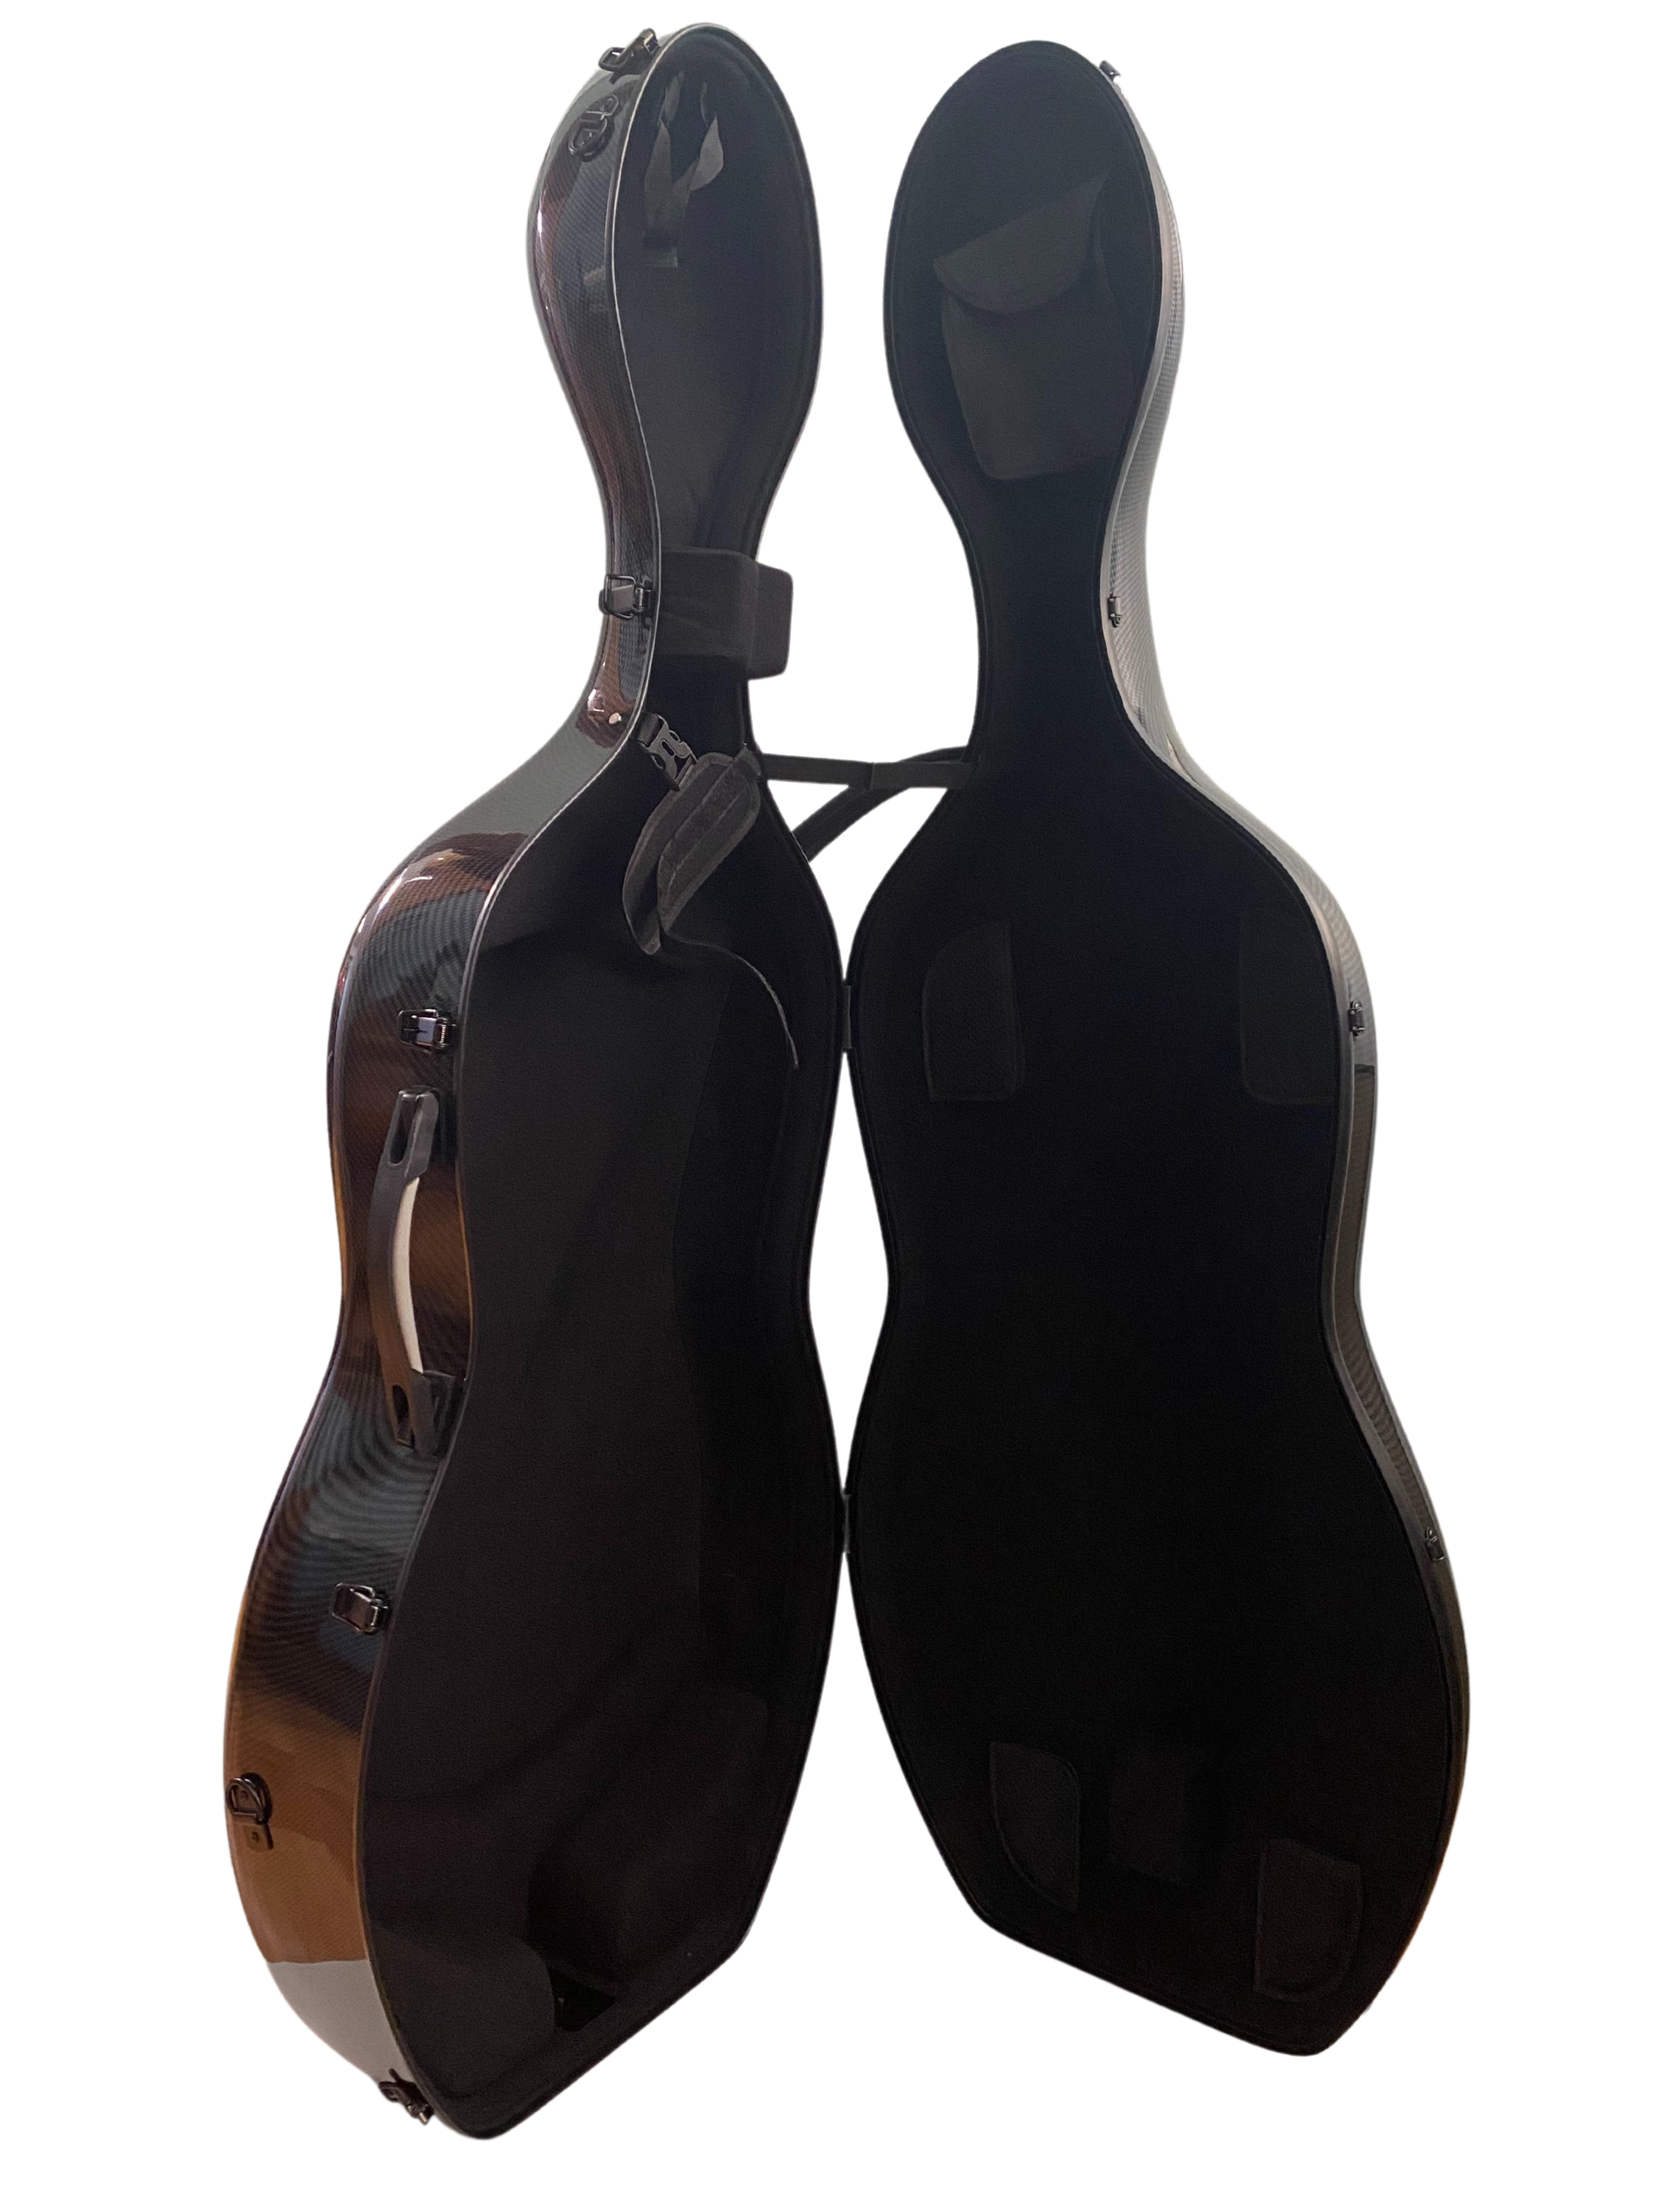 scf cello case black inside